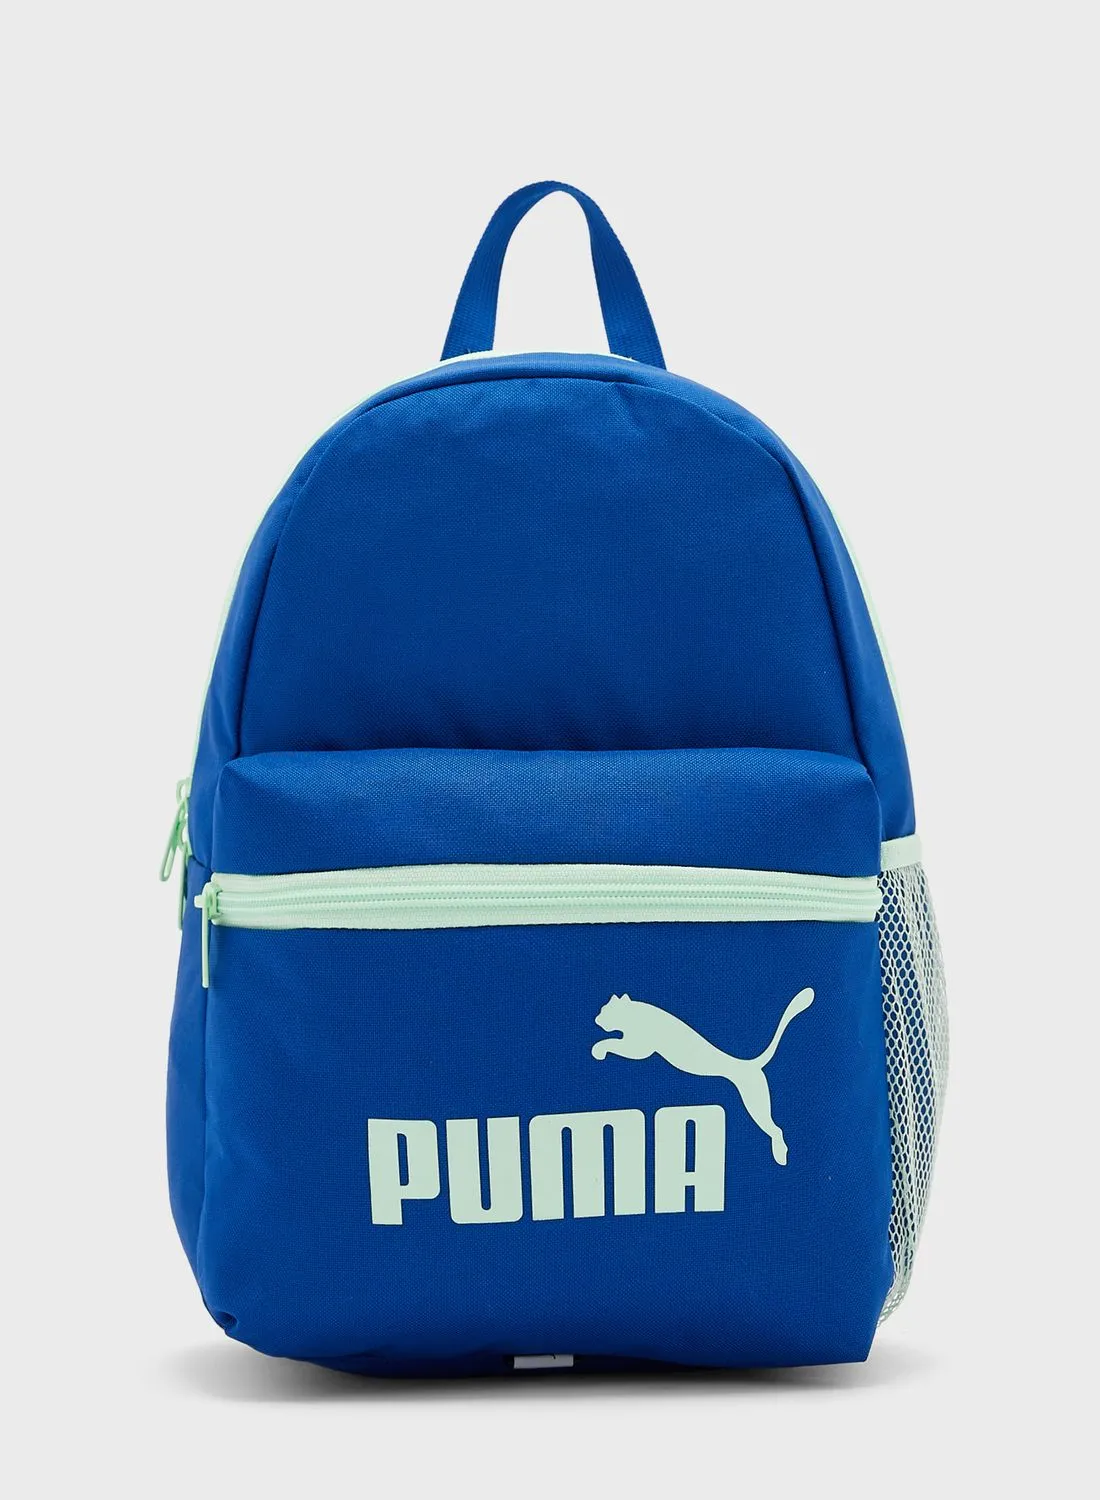 PUMA Kids Small Phase Backpack